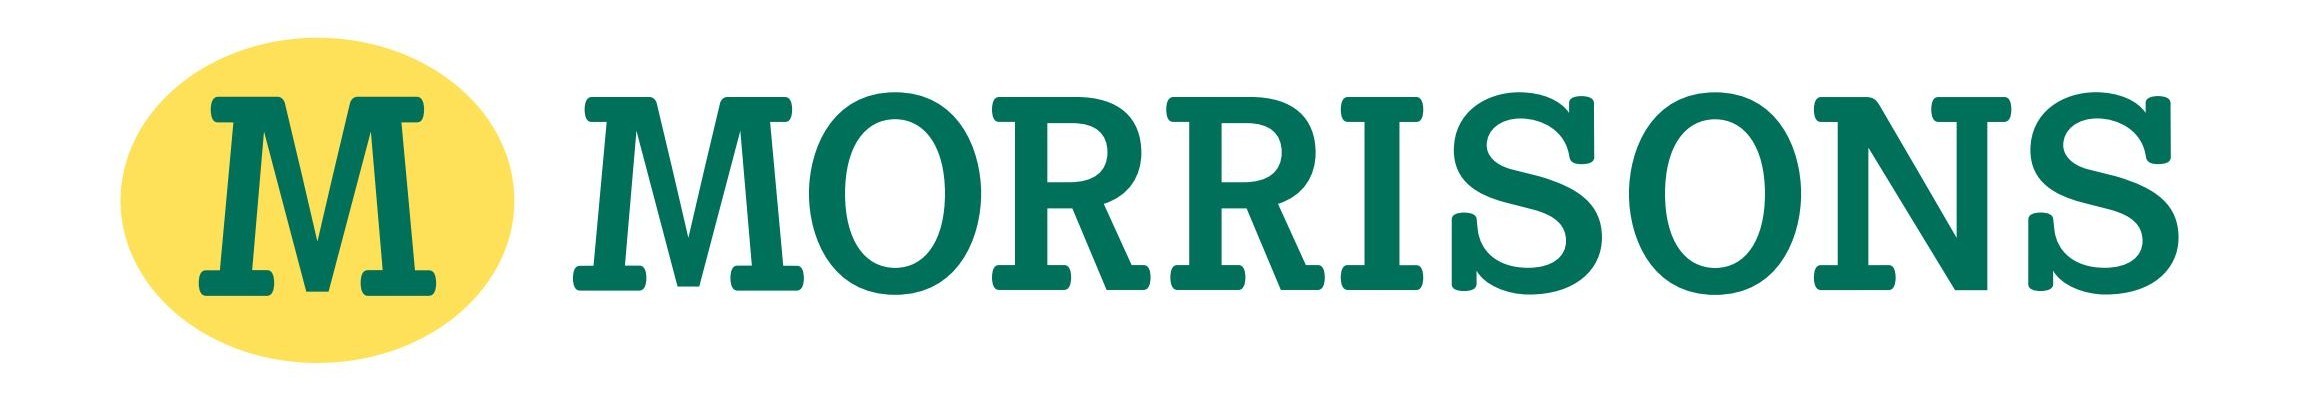 Wm Morrison Supermarkets Logo